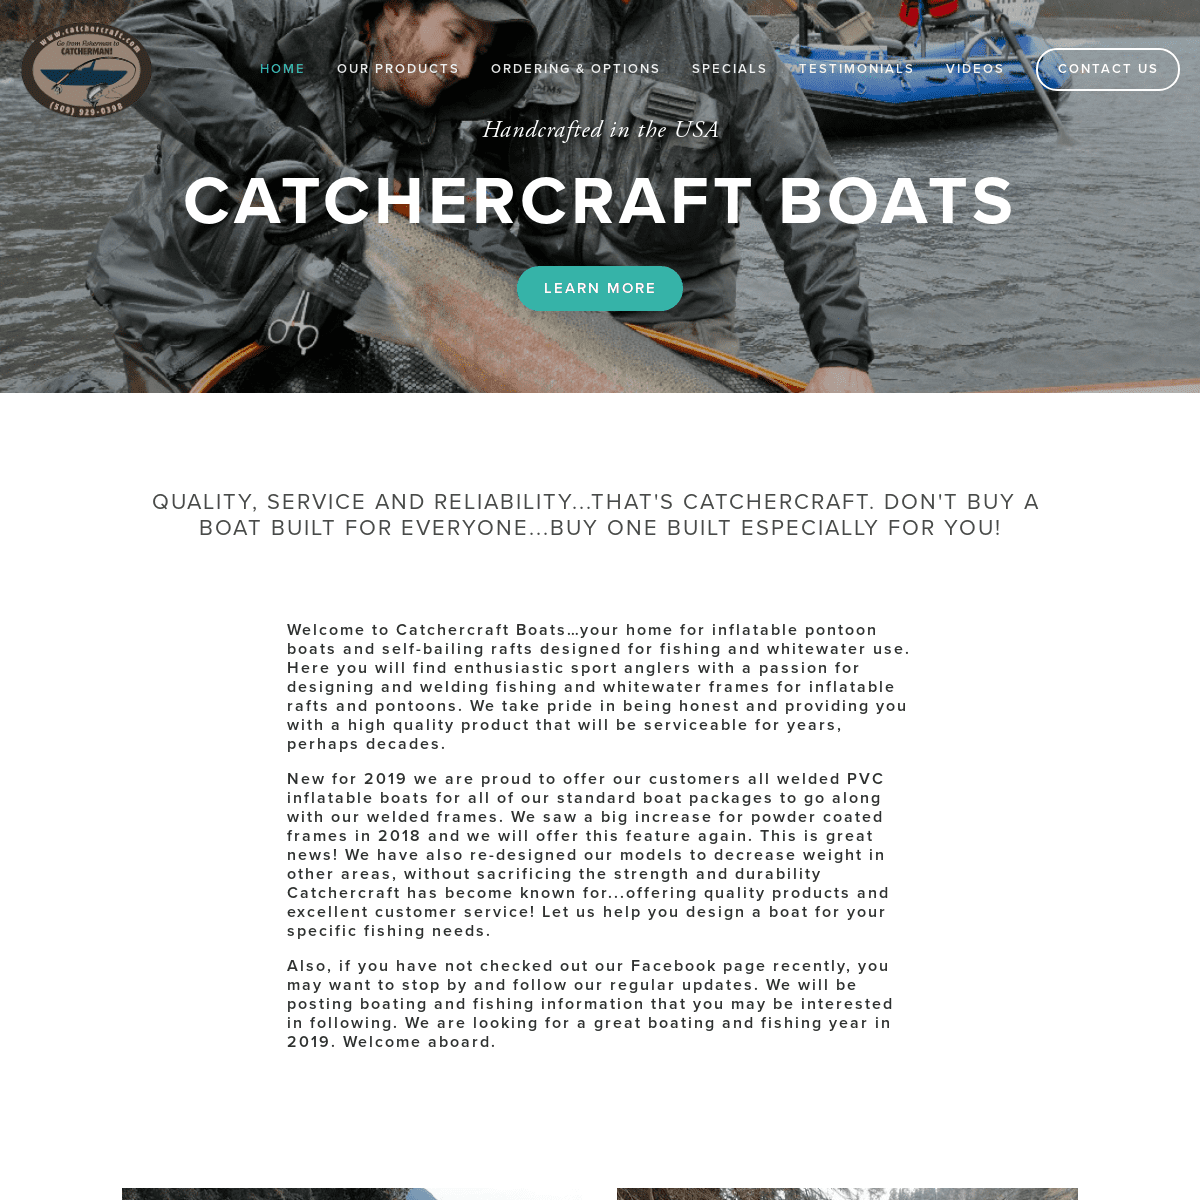 A complete backup of catchercraft.com